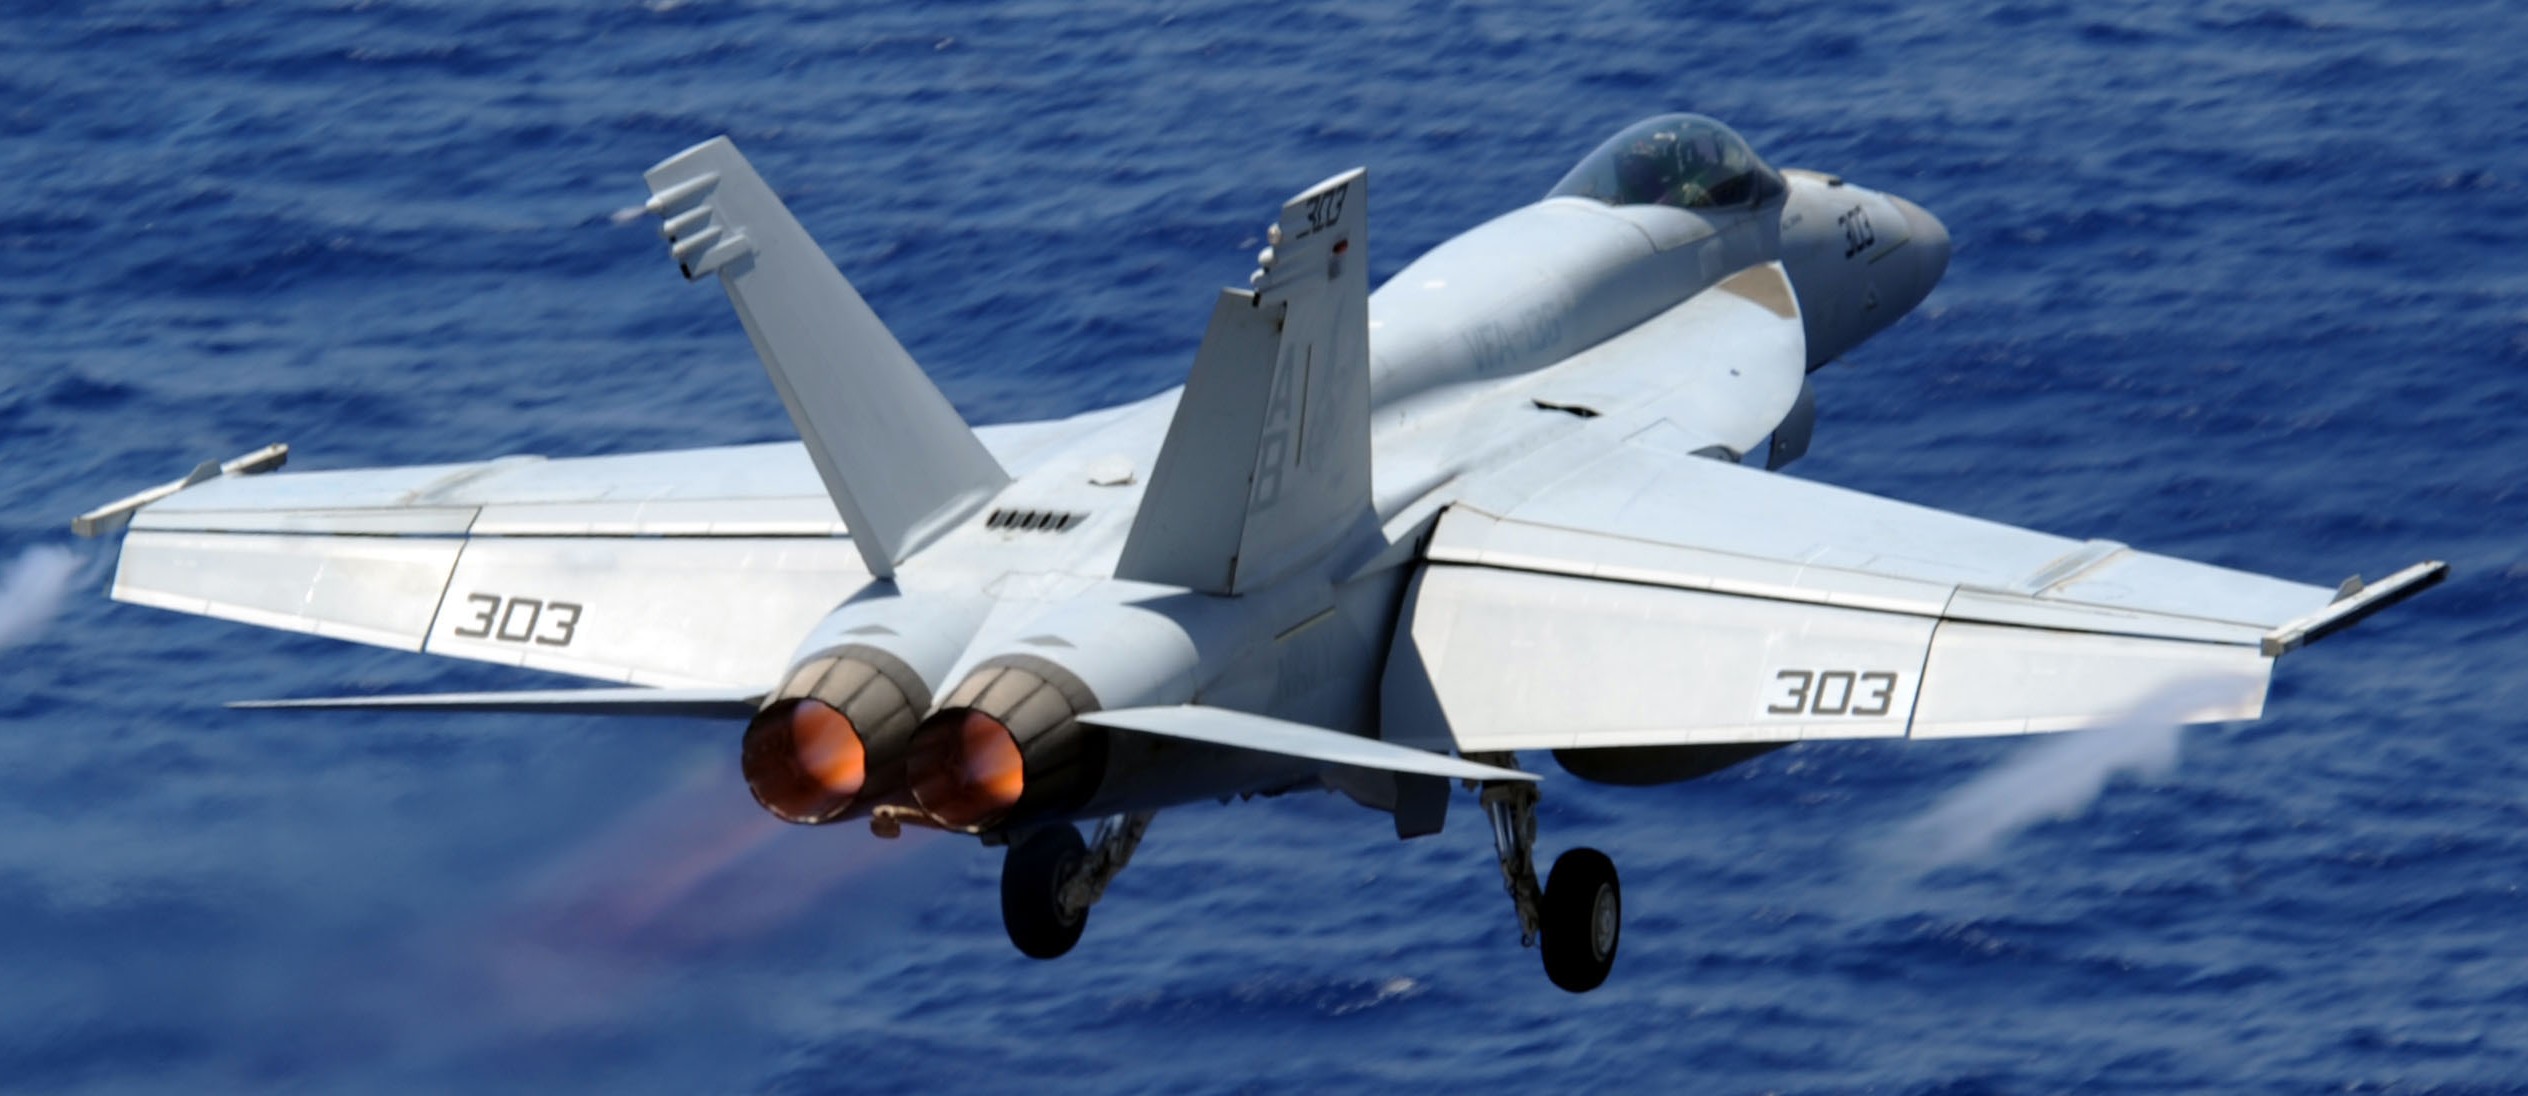 vfa-136 knighthawks strike fighter squadron f/a-18e super hornet 2011 14 cvw-1 uss enterprise cvn-65